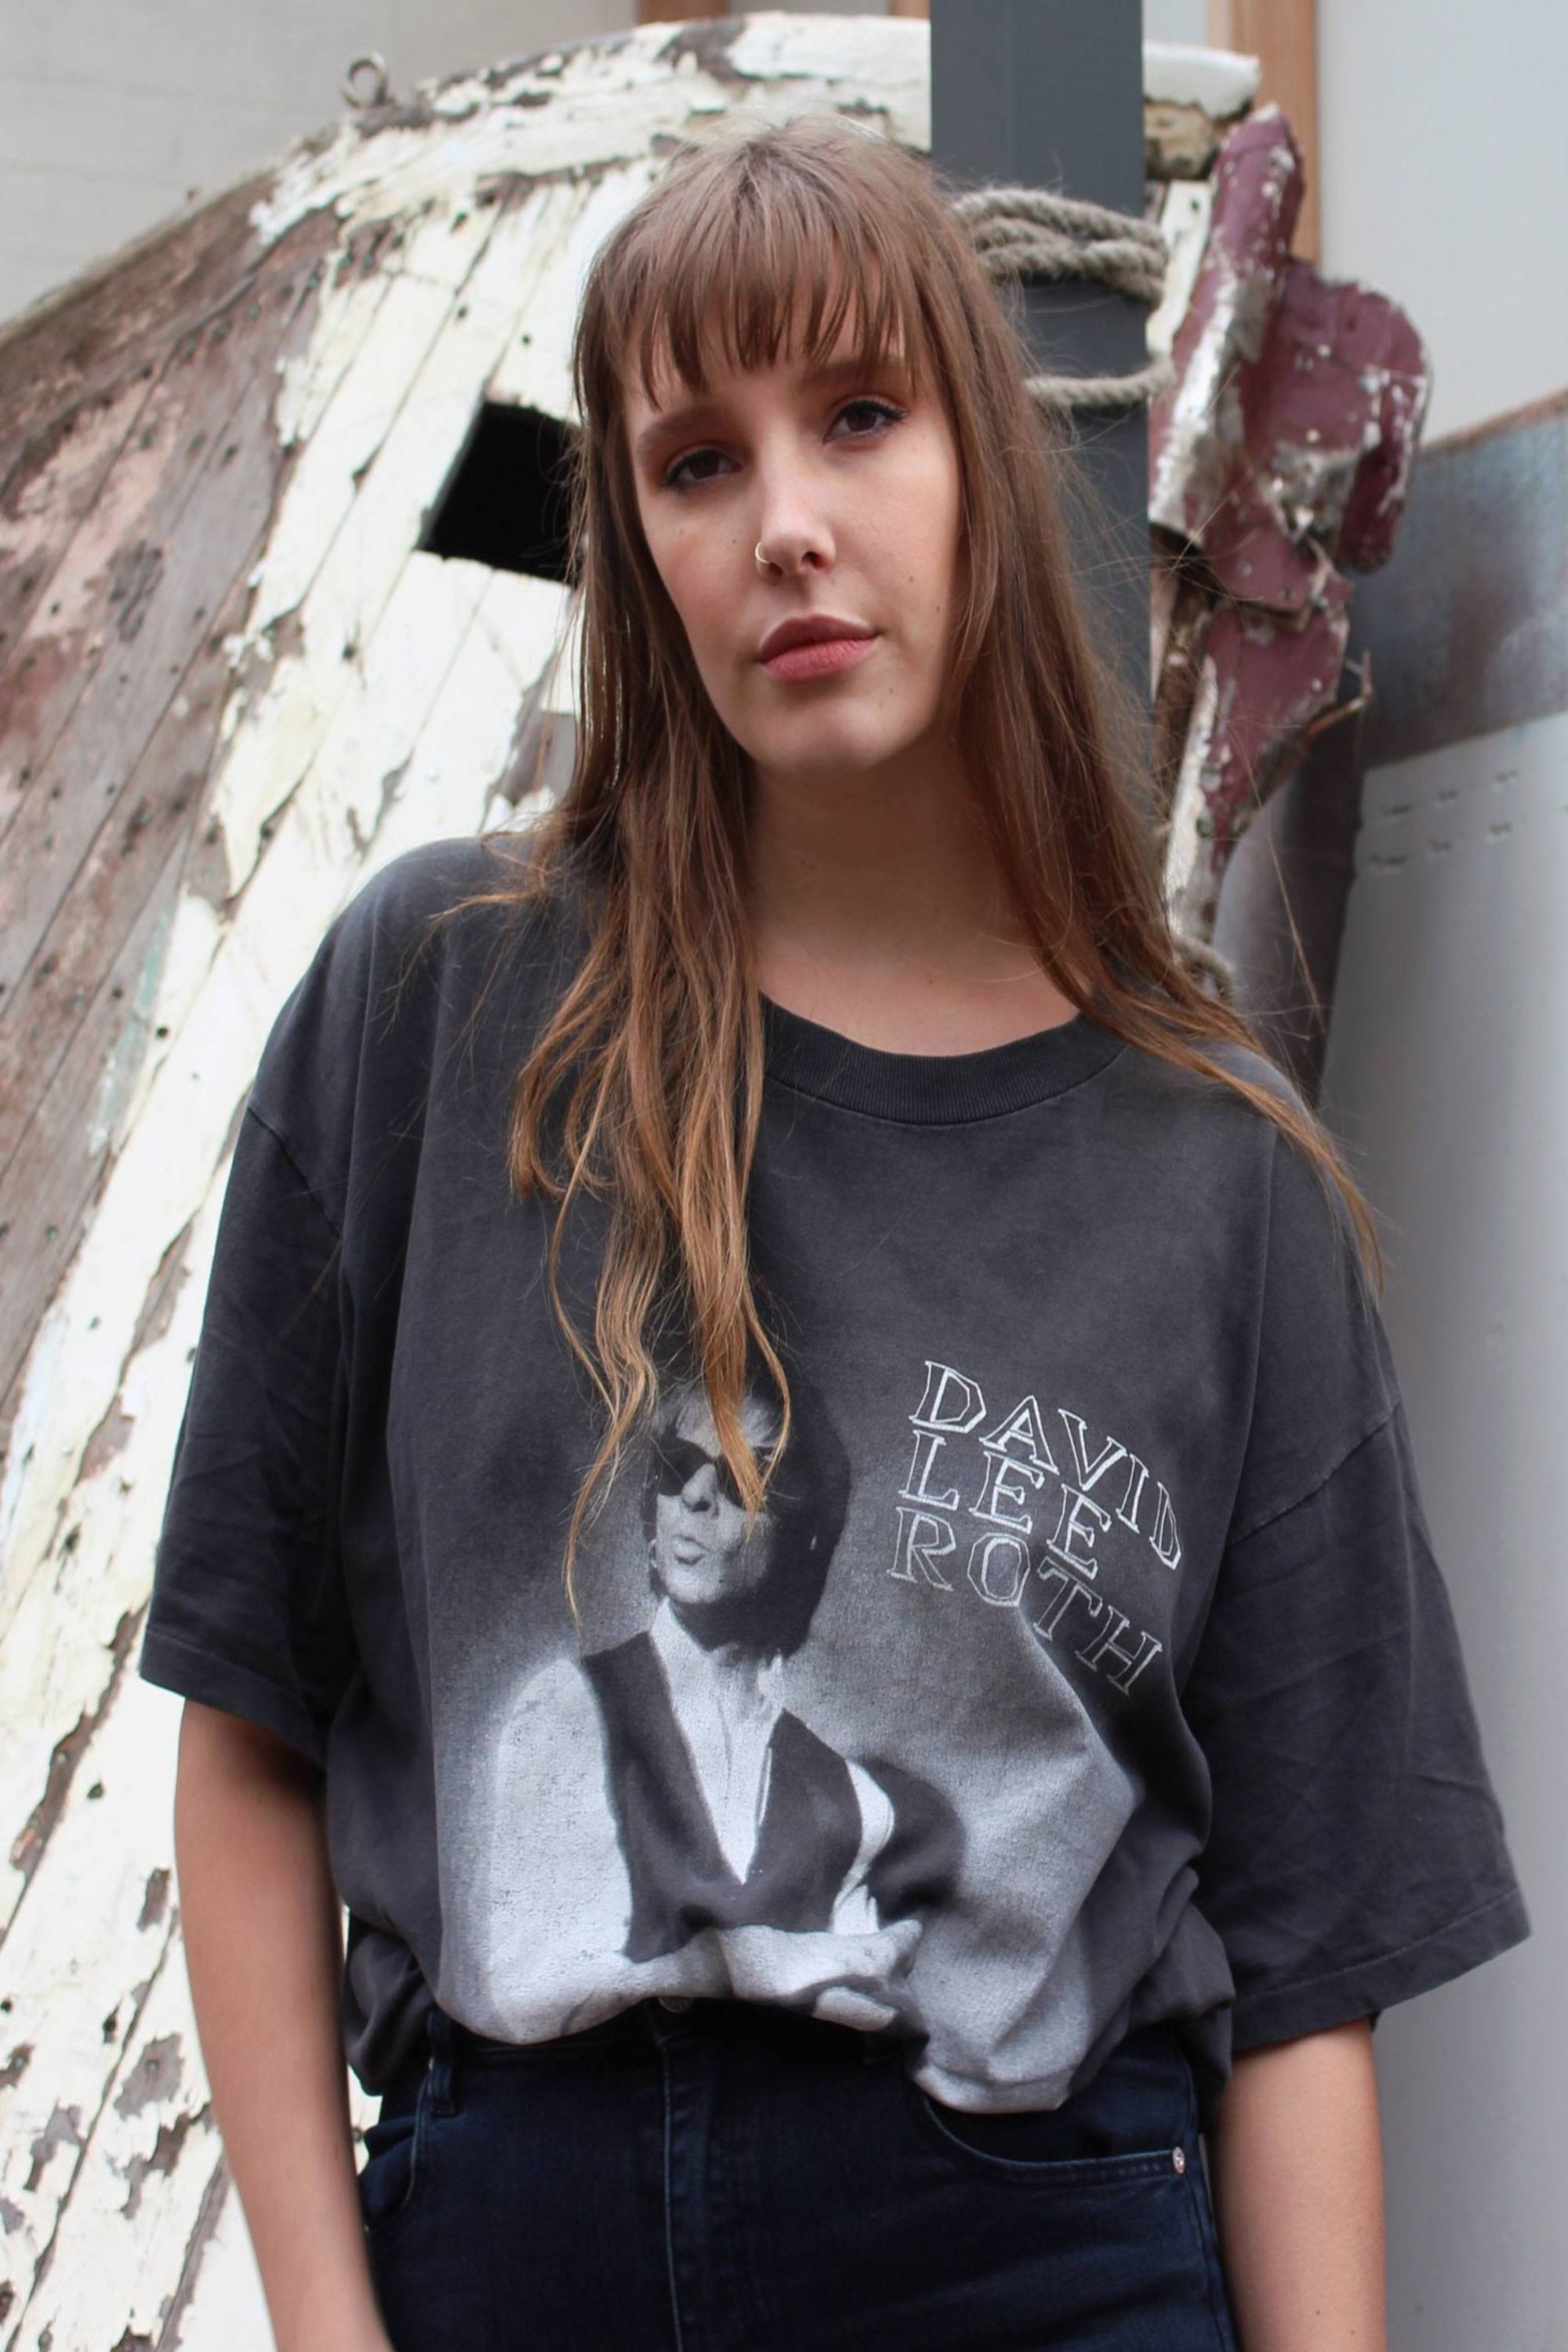 Grunge Print Tshirt - Mens Festival Clothes - Soft Graphic T-Shirt - 90s Grunge Tshirt - Concert Tees Vintage - David Lee Roth T-shirt